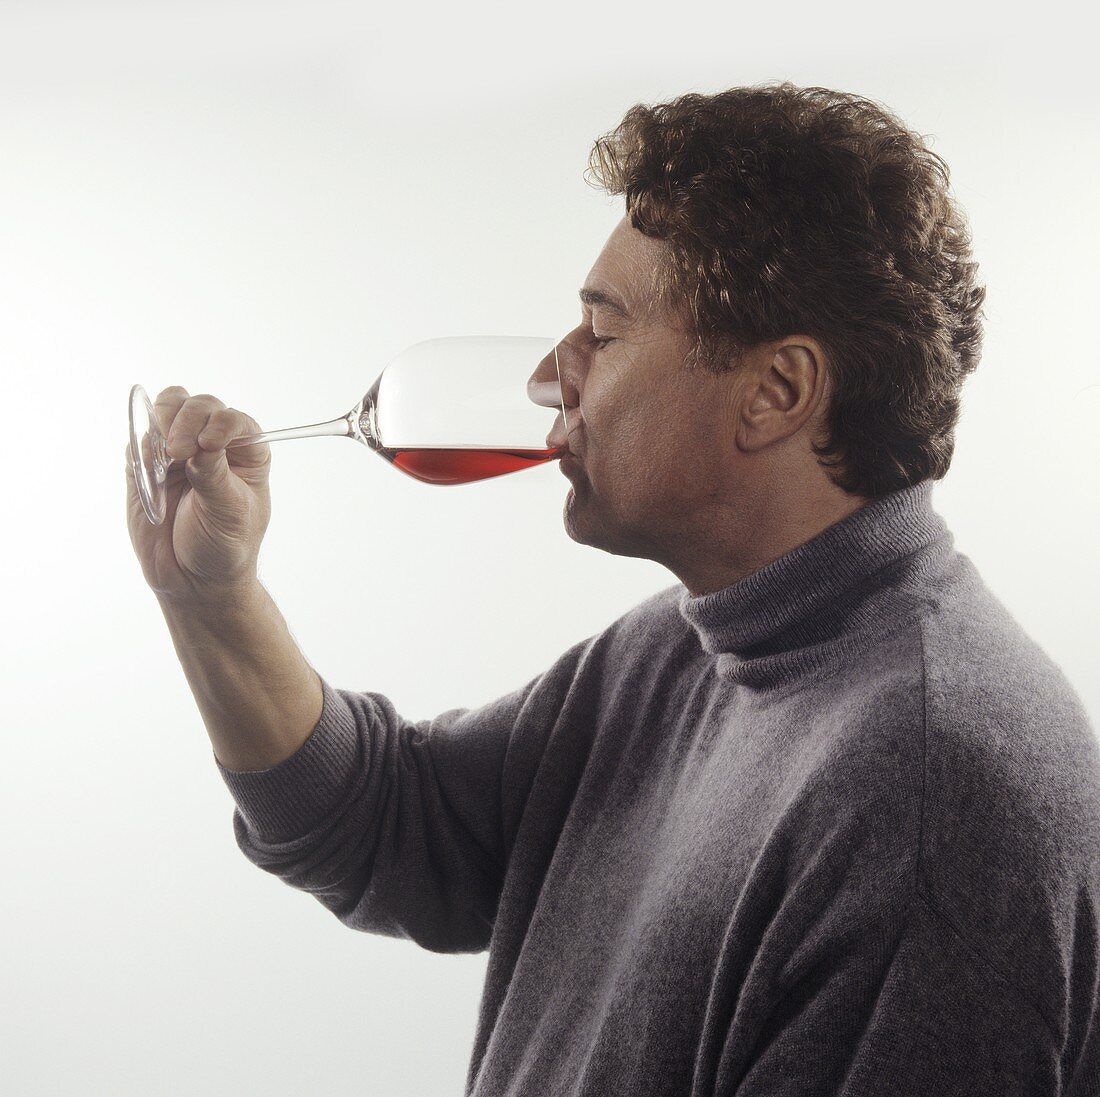 Tasting wine: taking a sip